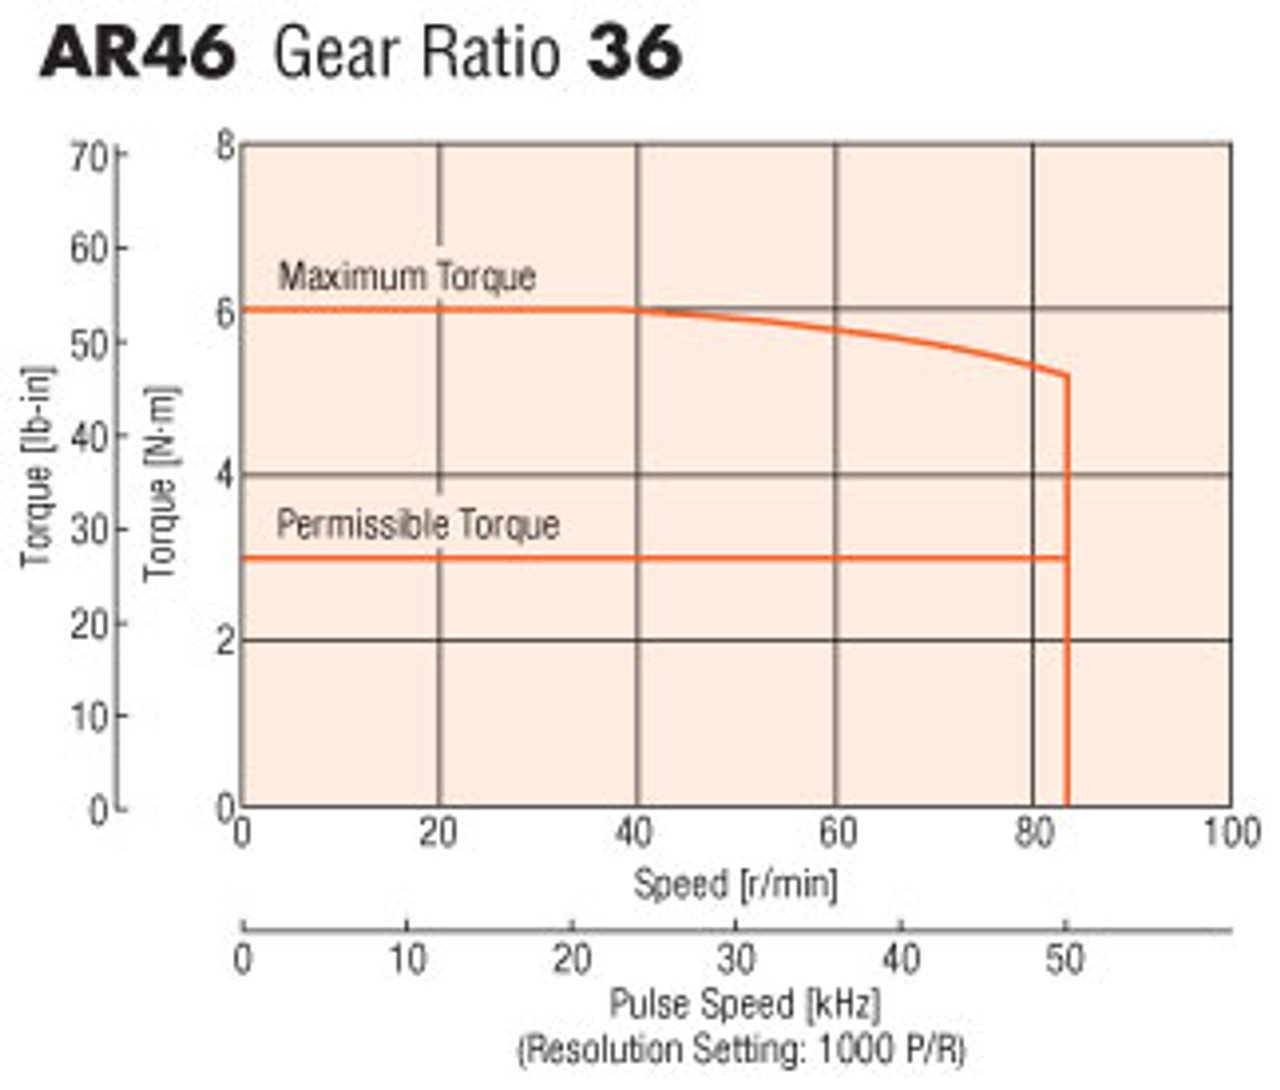 AR46MC-PS36-3 - Speed-Torque